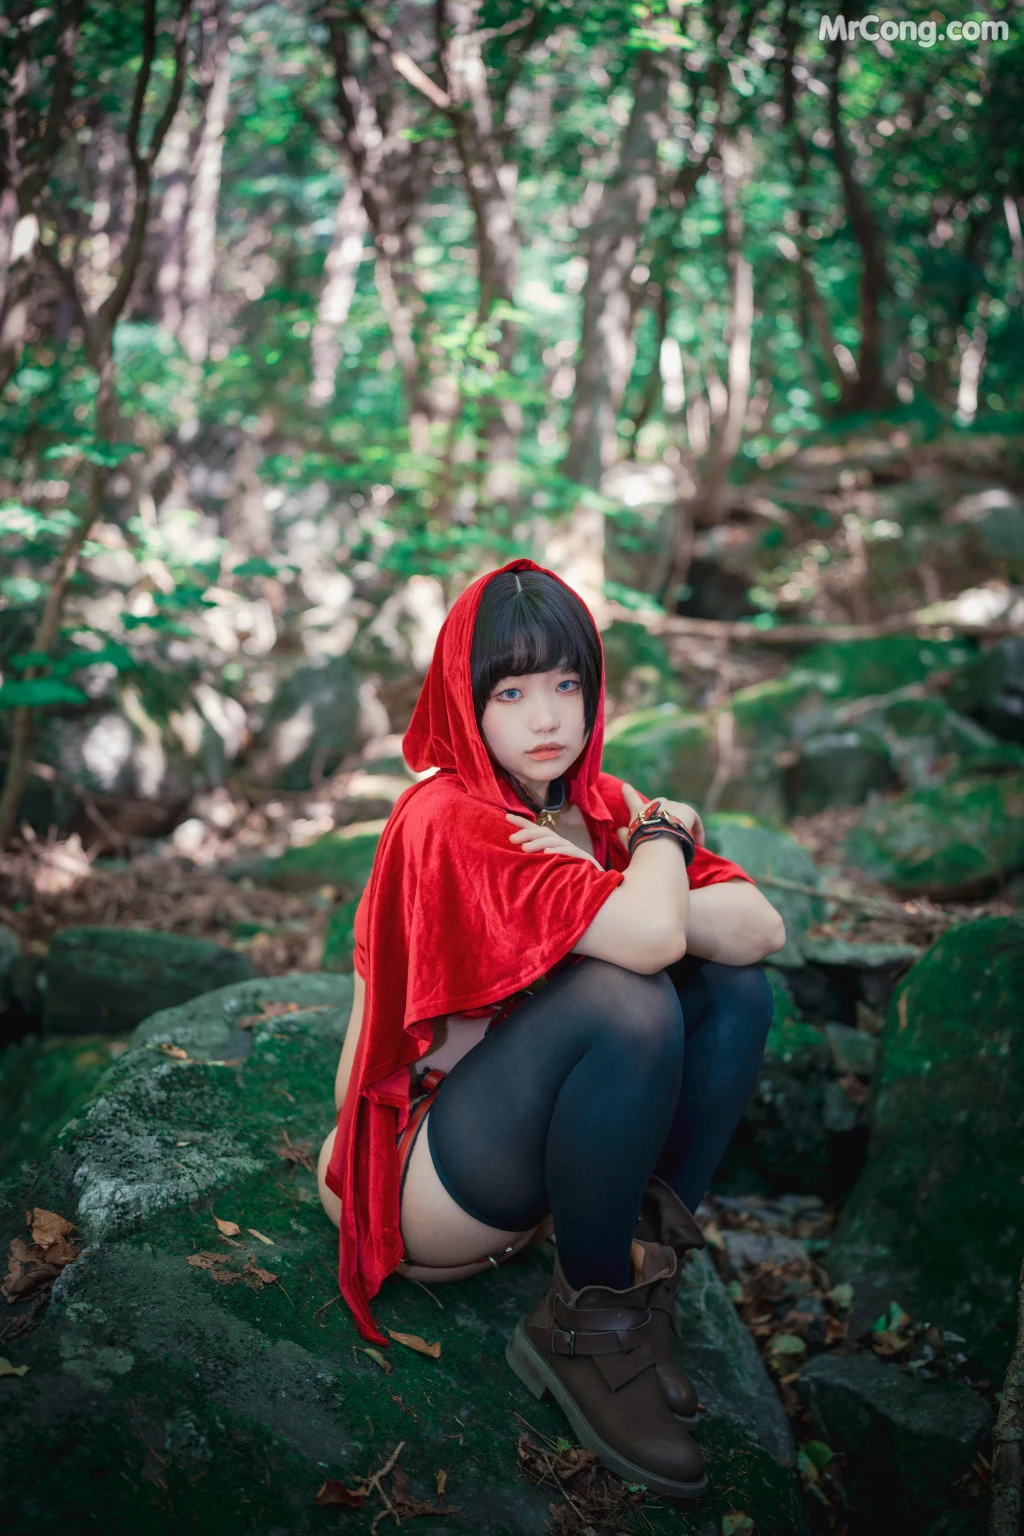 DJAWA Photo - Mimmi (밈미): "Naughty Red Hiring Hood" (125 photos) photo 2-7